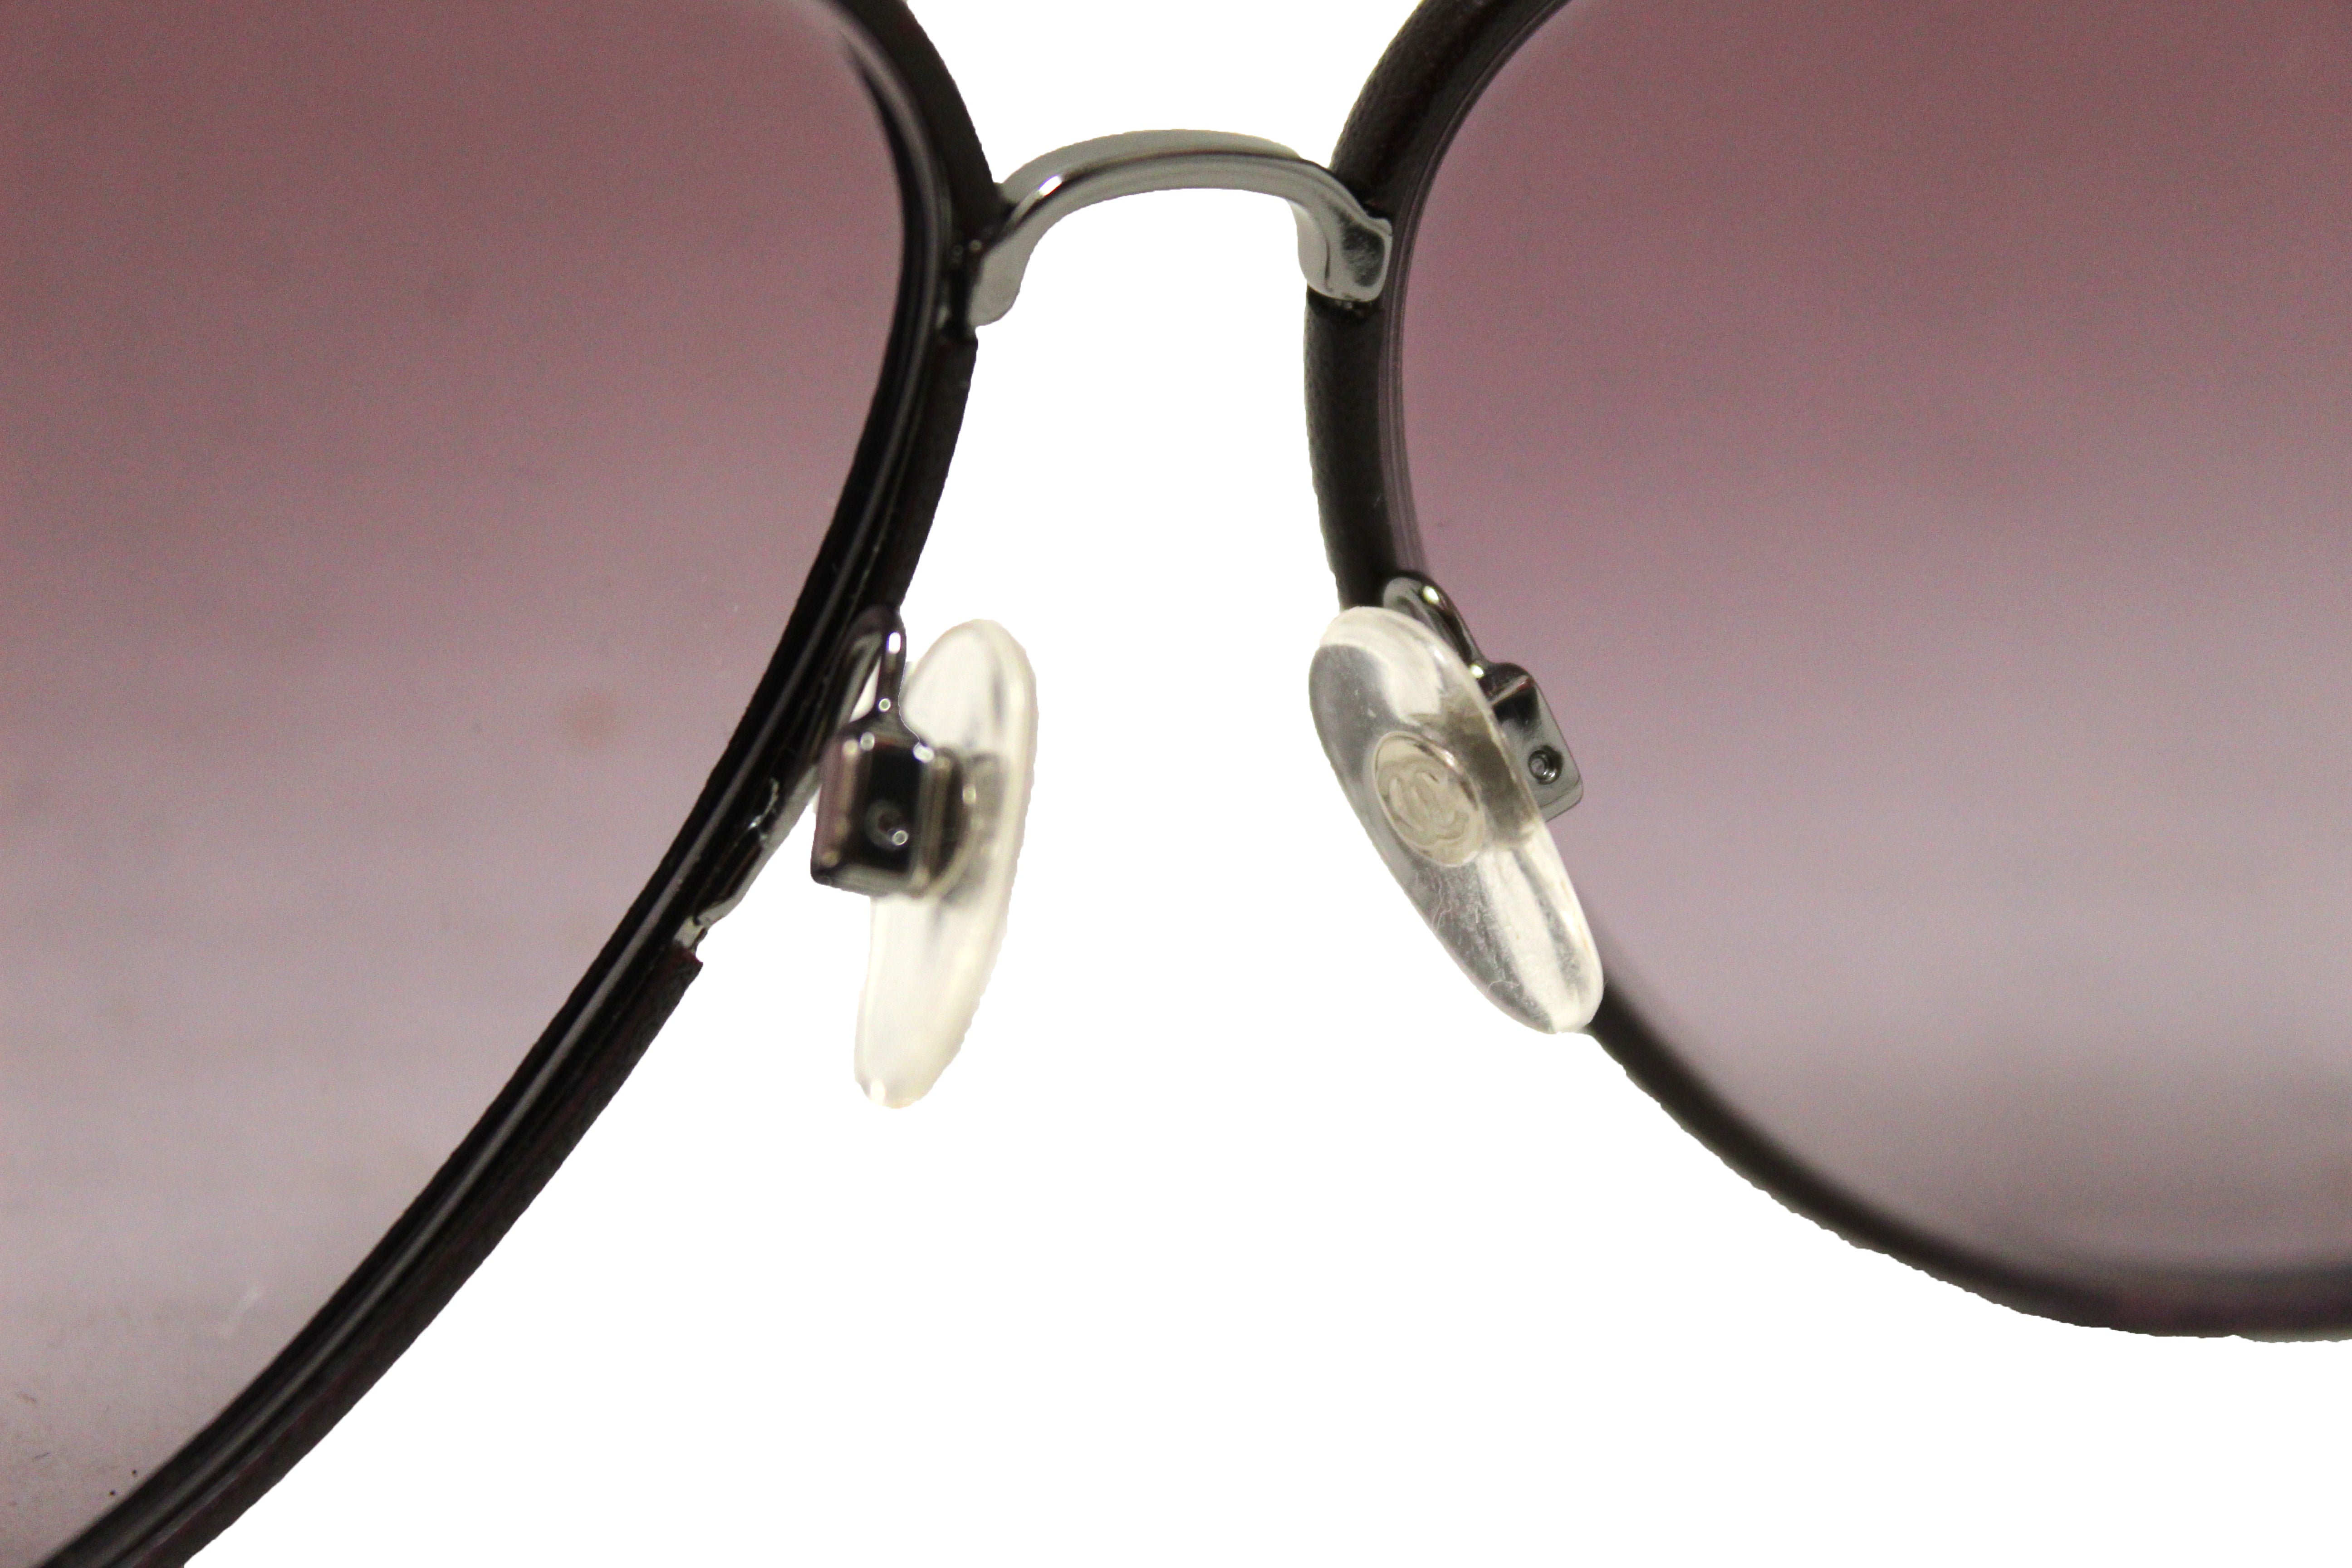 Authentic Chanel Violet Calfskin/Metal Aviator Pilot Sunglasses 4219Q